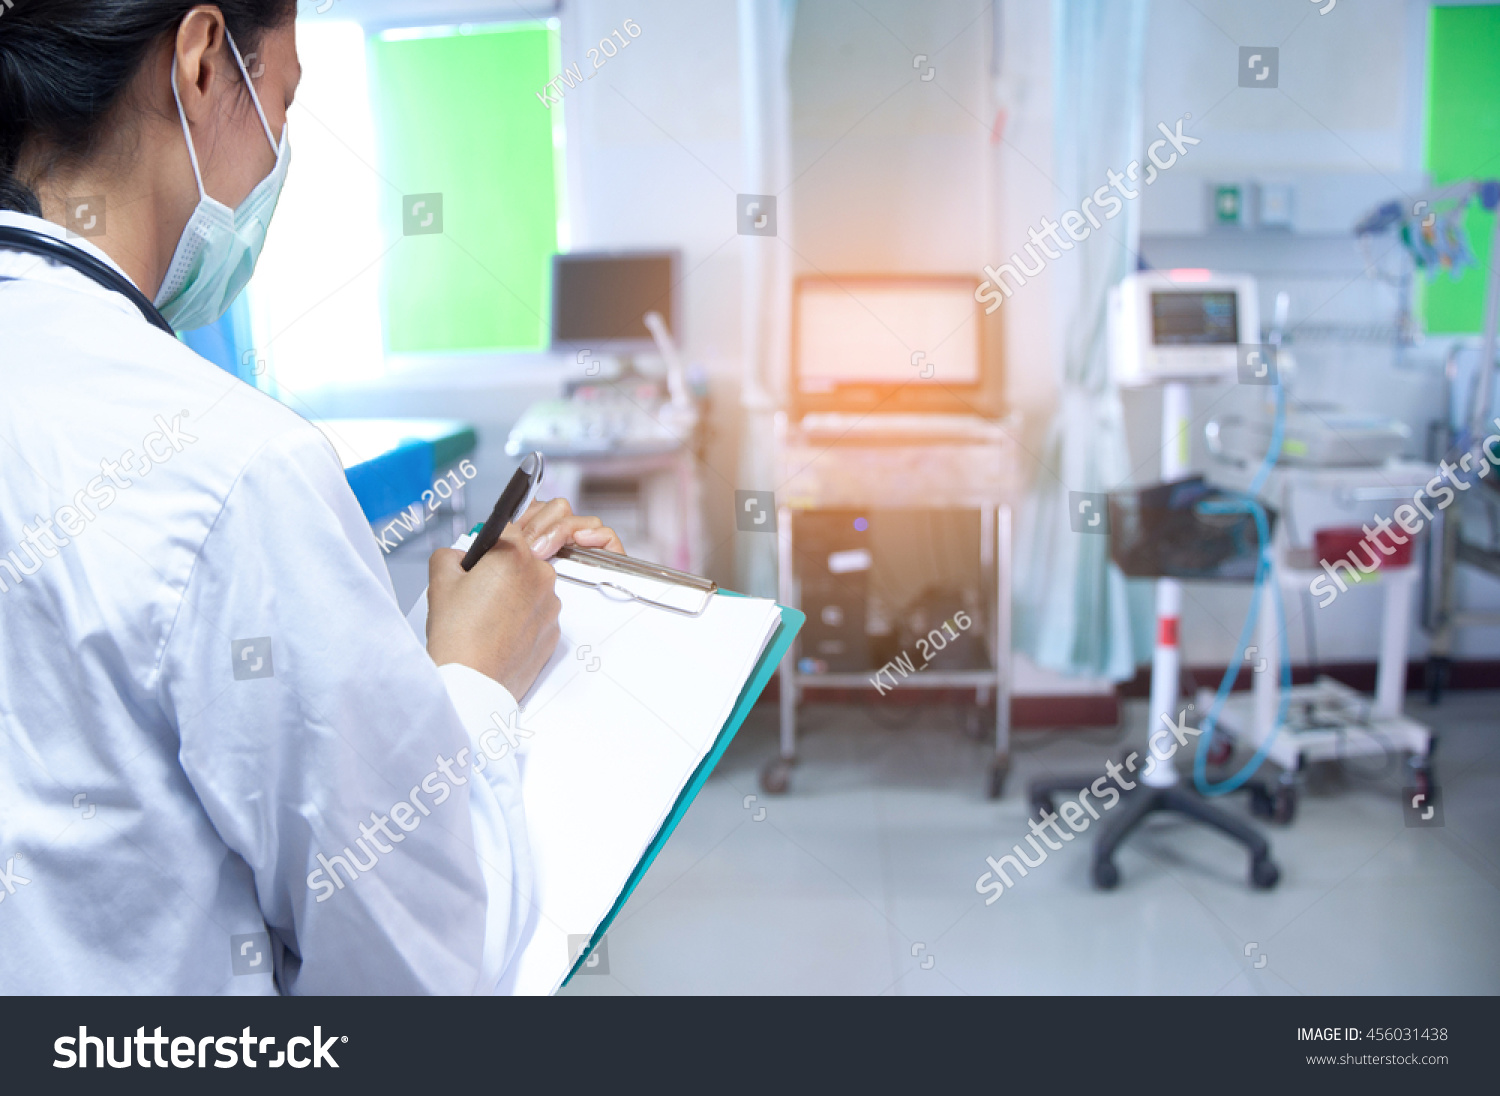 Doctor writing a medical prescription #456031438